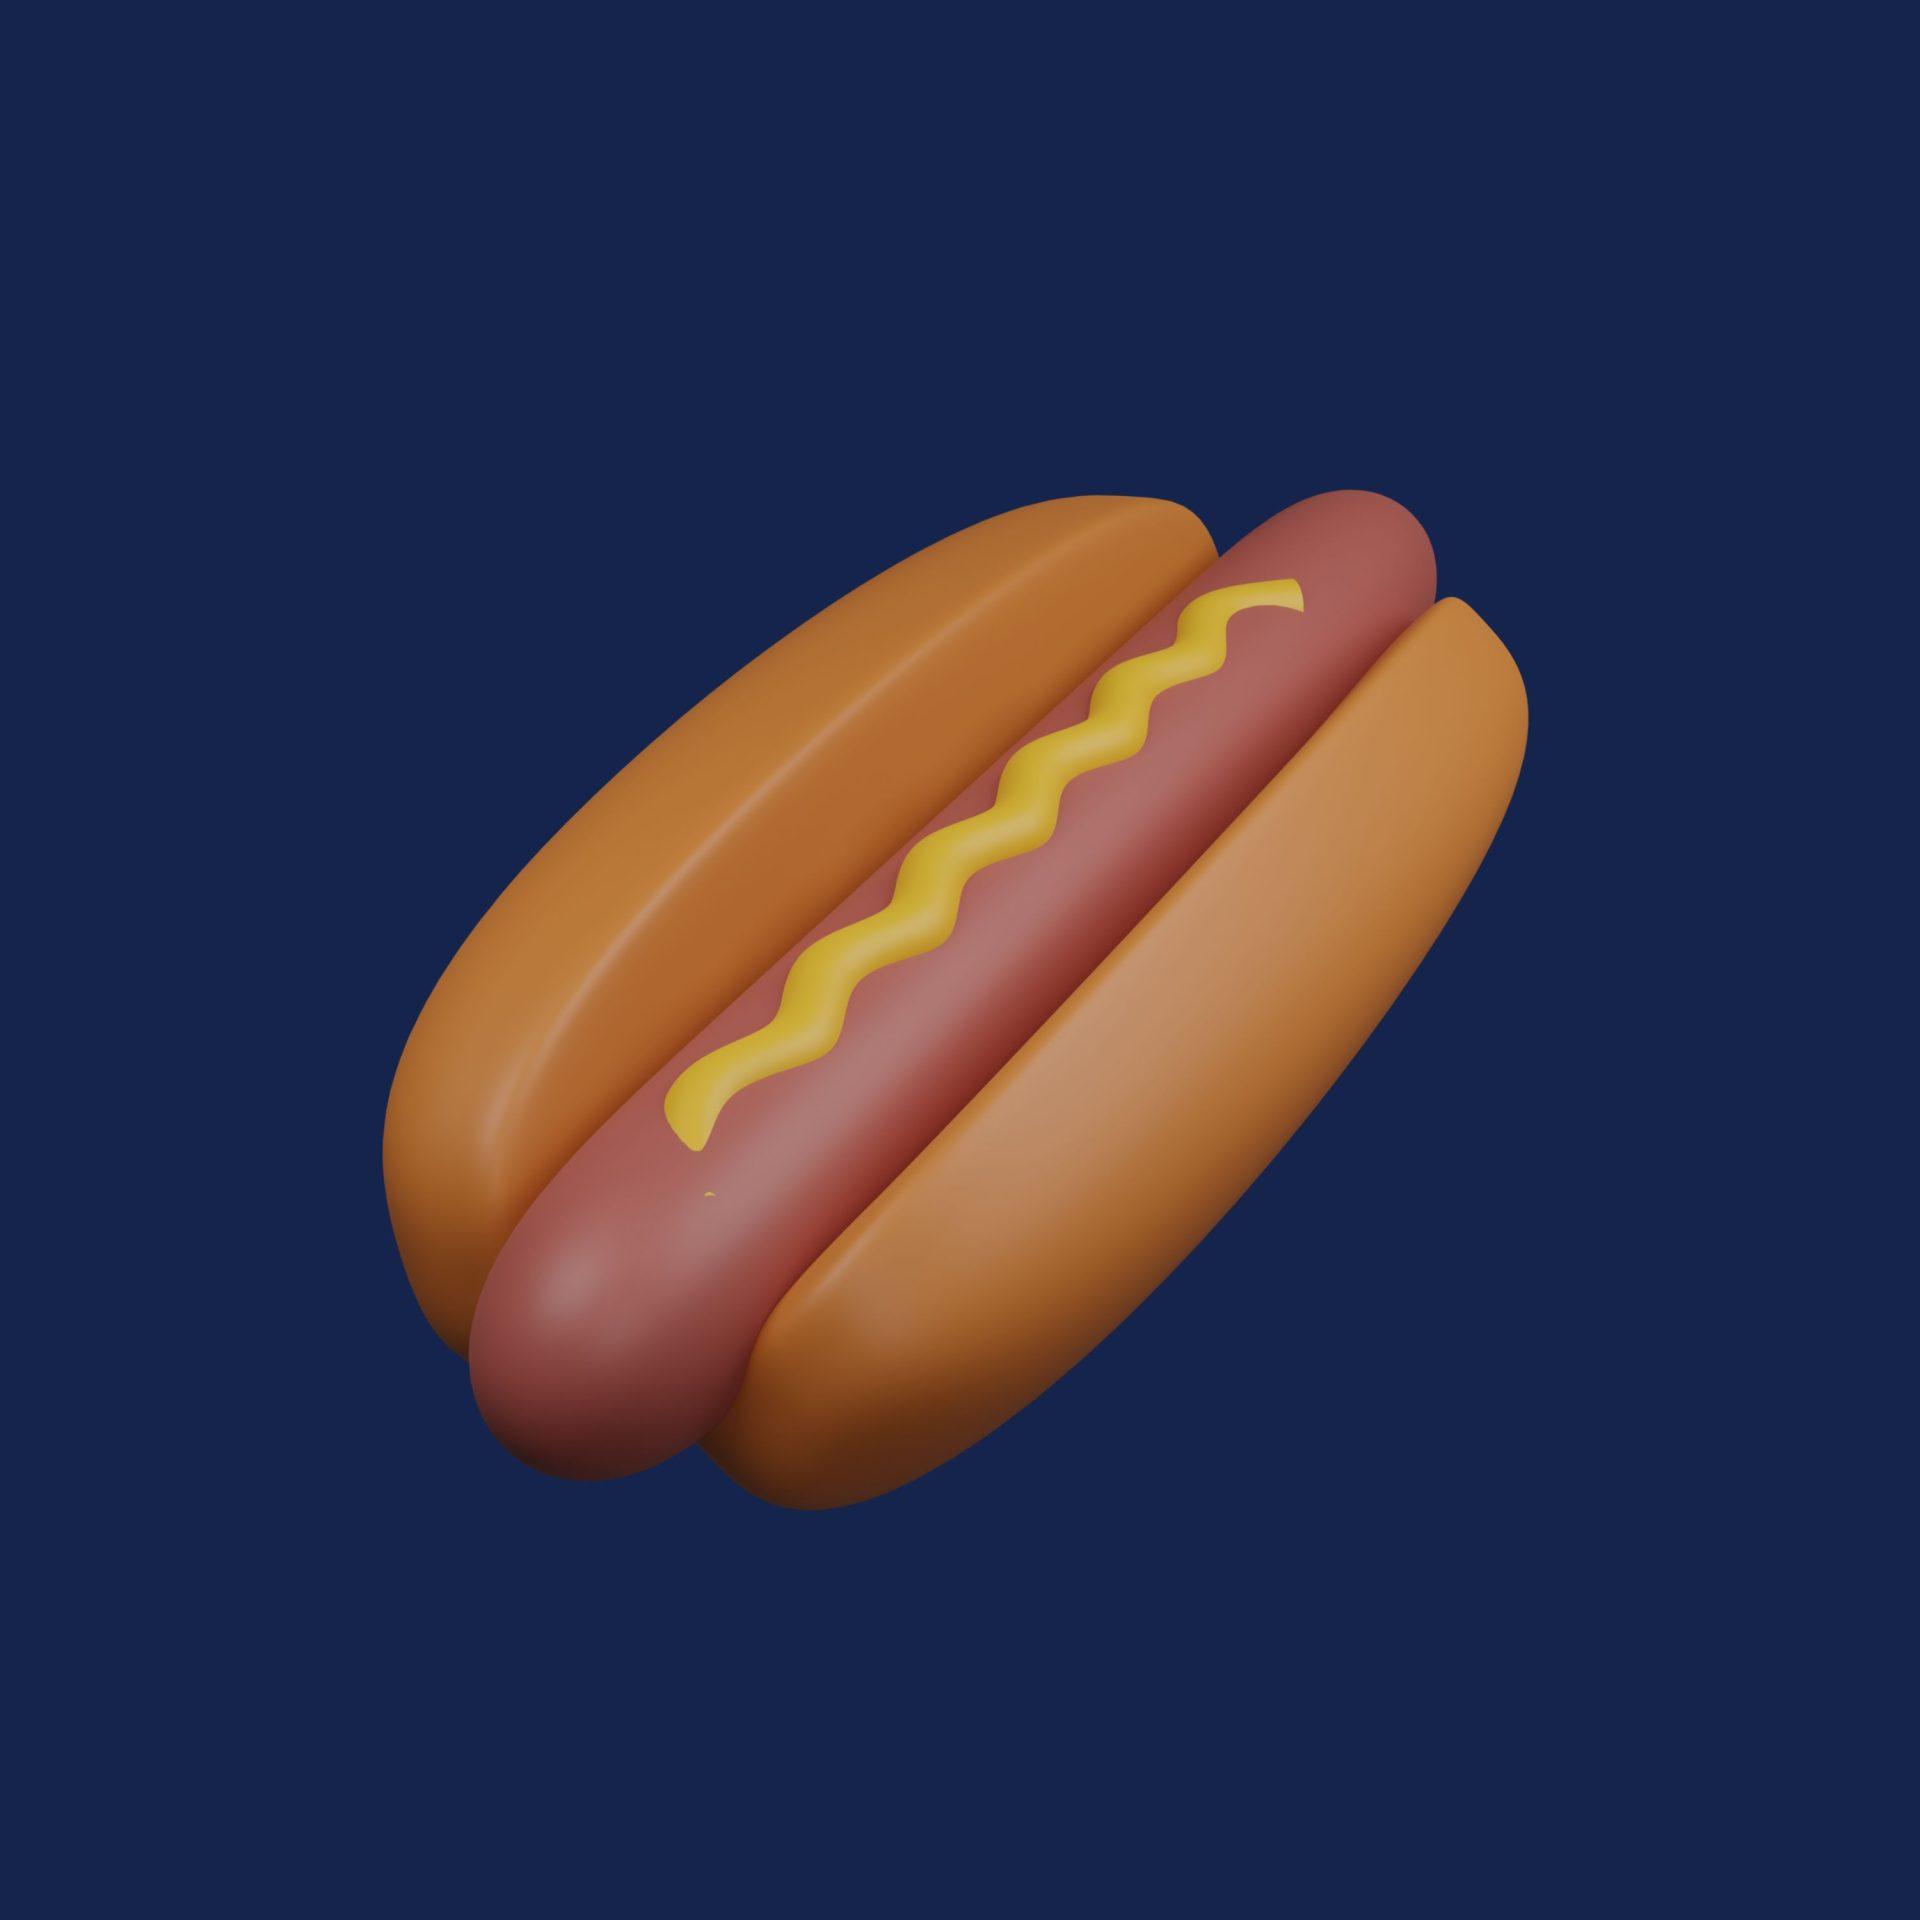 3d-hotdog-cartoon-icon-illustration-3d-fast-food-object-icon